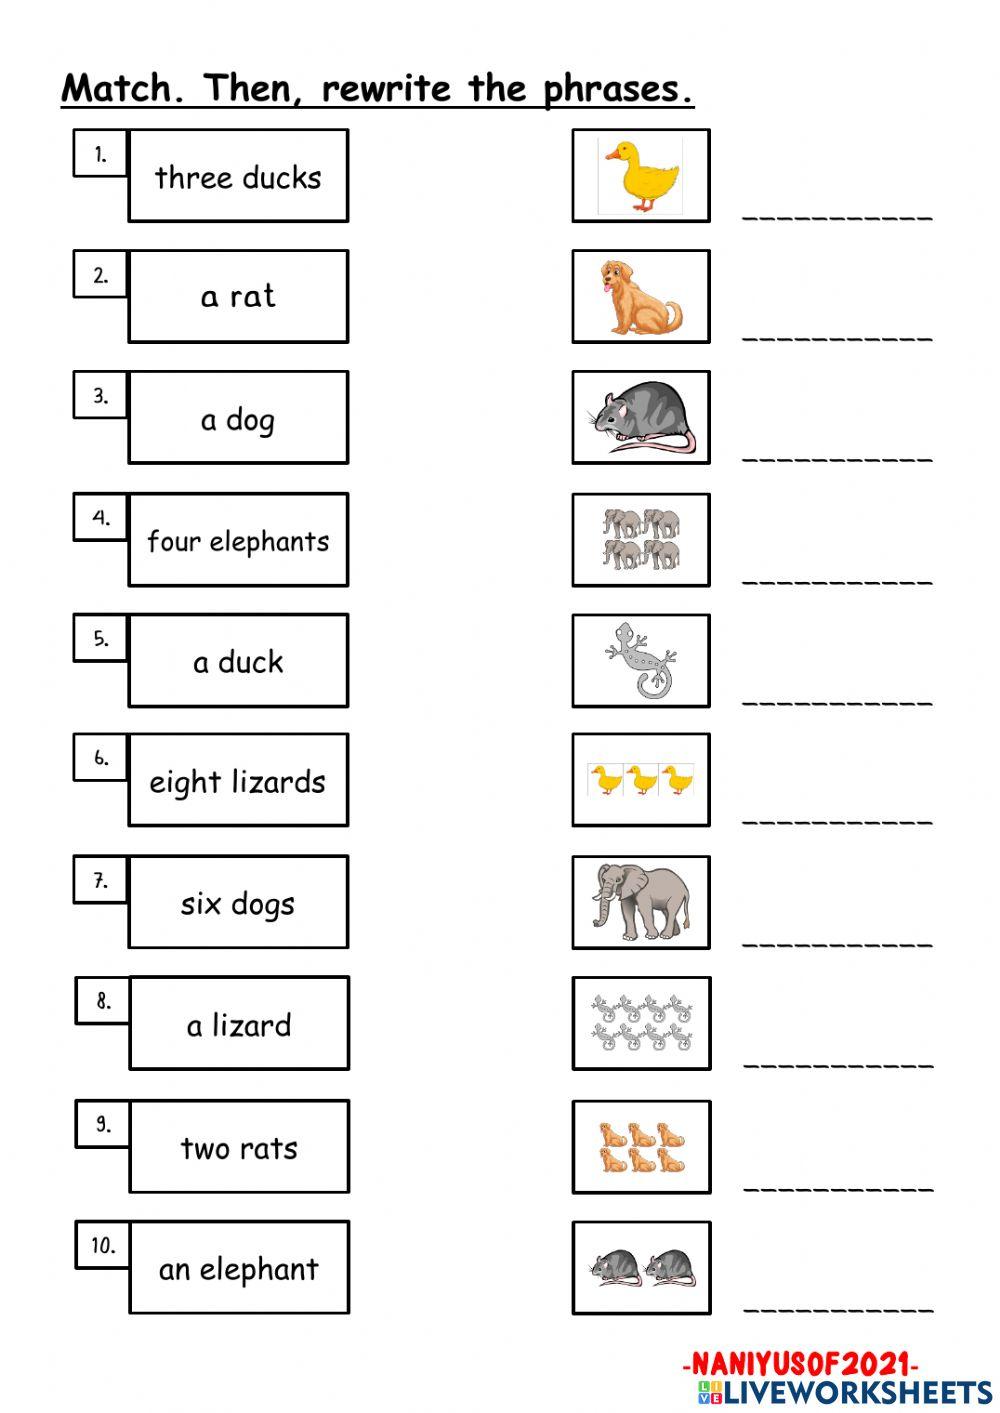 Singular and plural nouns (animals)